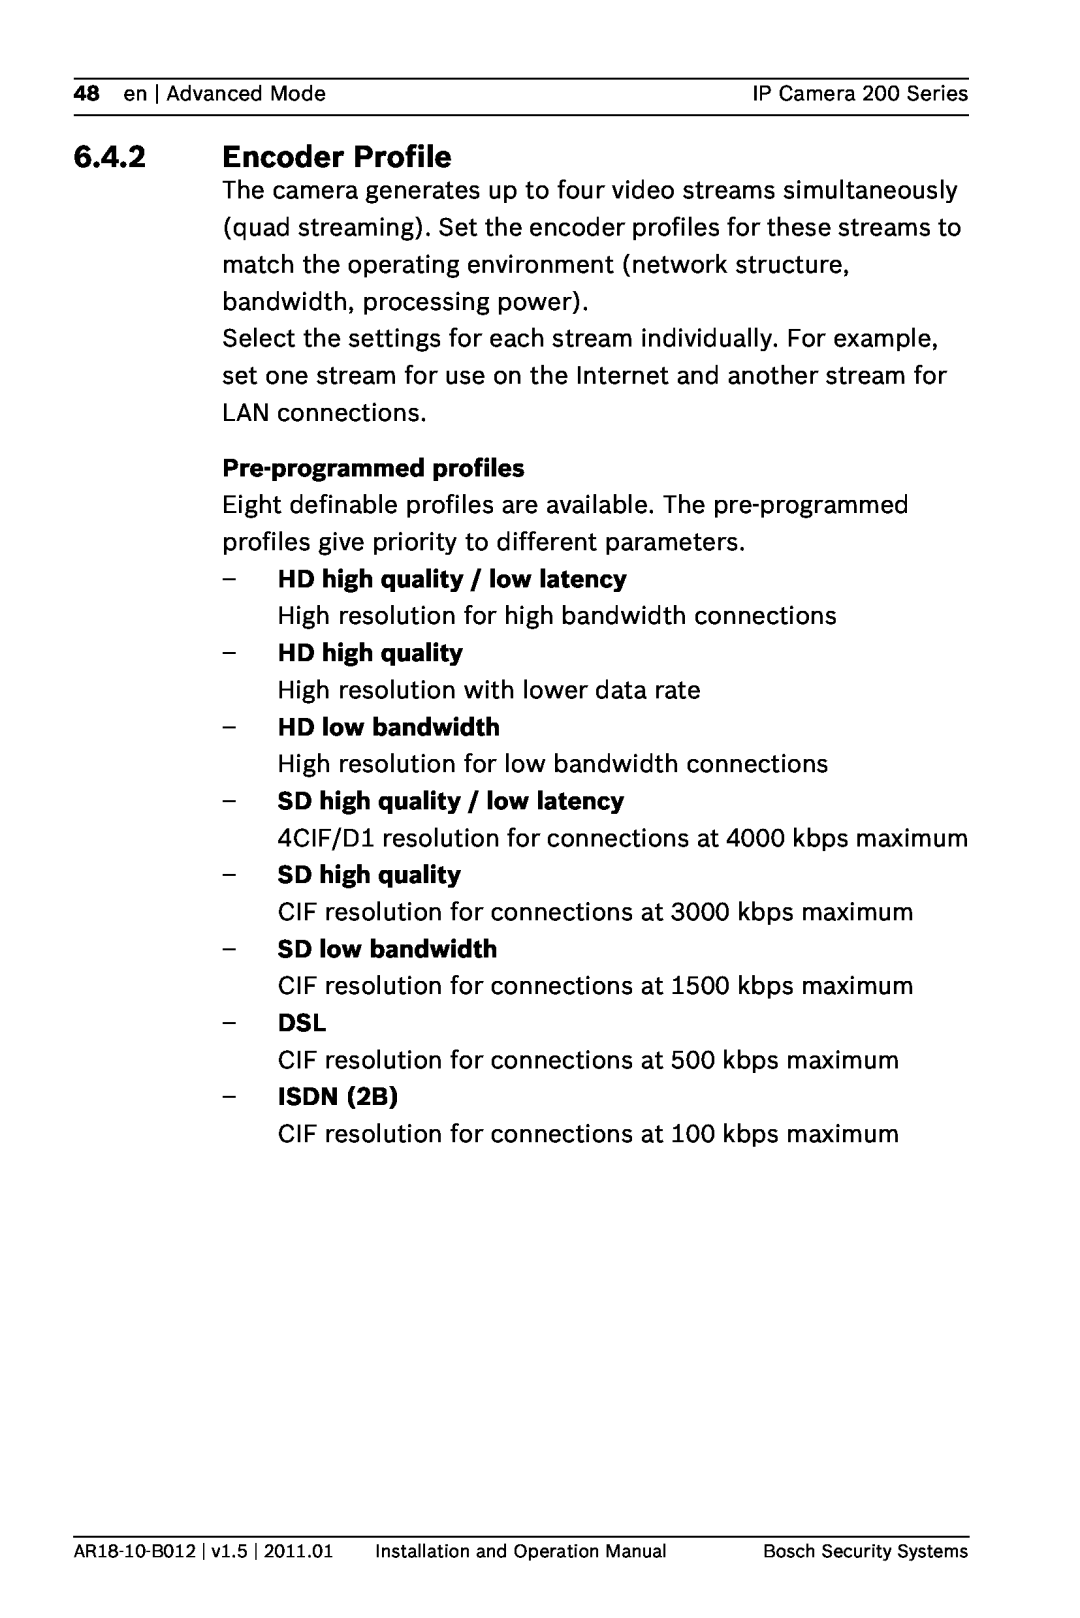 Bosch Appliances NDC-265-P operation manual AR18-10-B012 v1.5, Installation and Operation Manual, Bosch Security Systems 